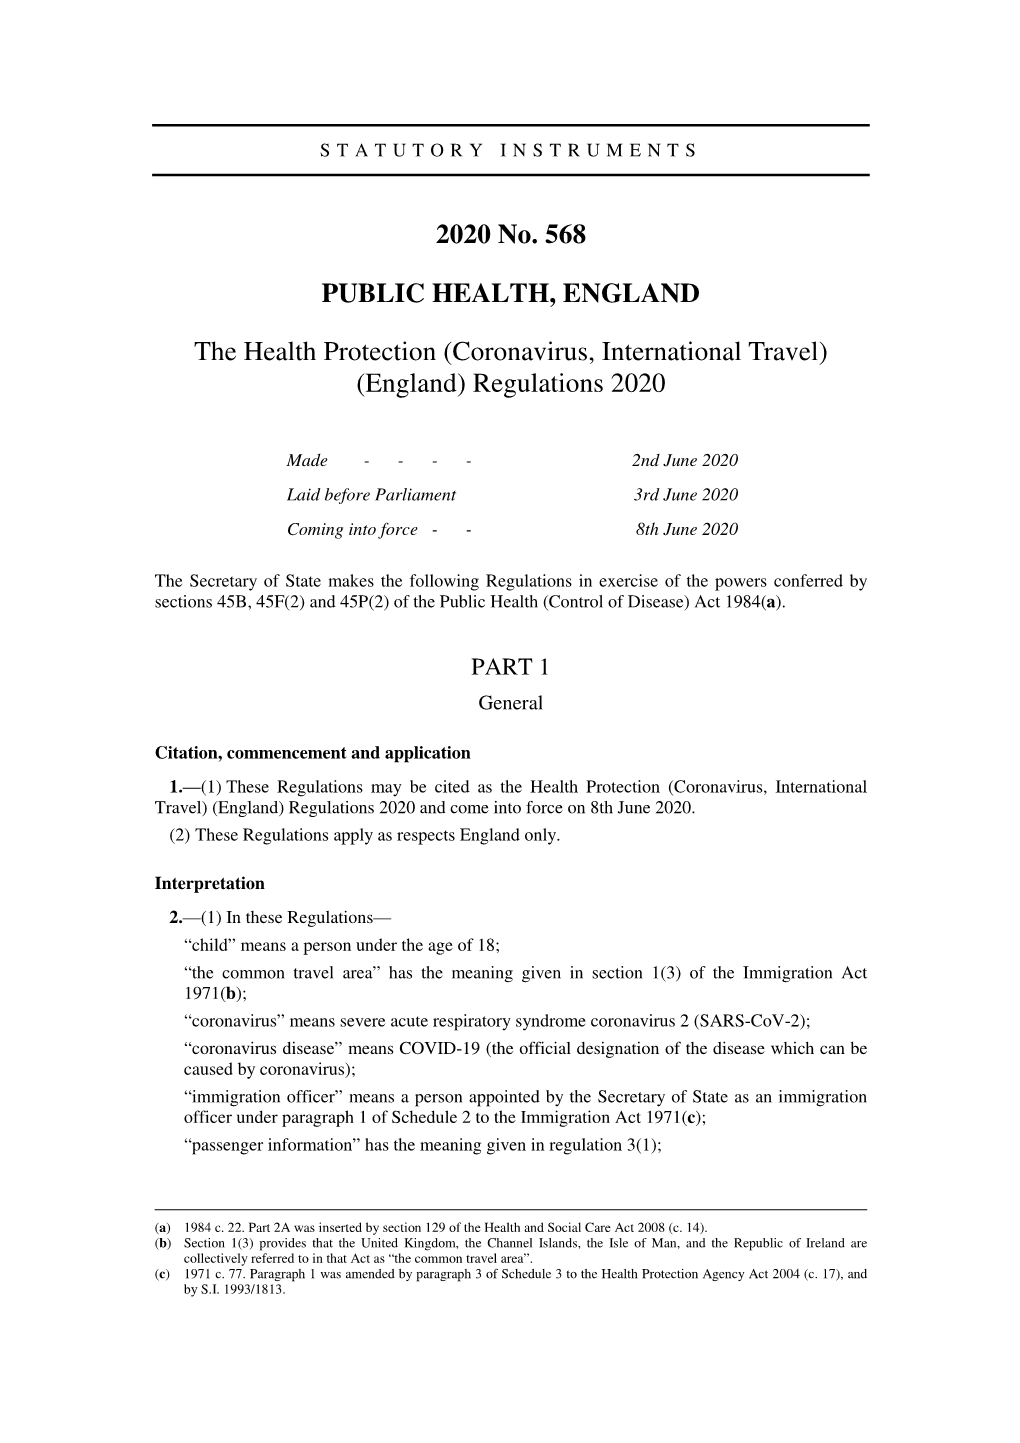 The Health Protection (Coronavirus, International Travel) (England) Regulations 2020